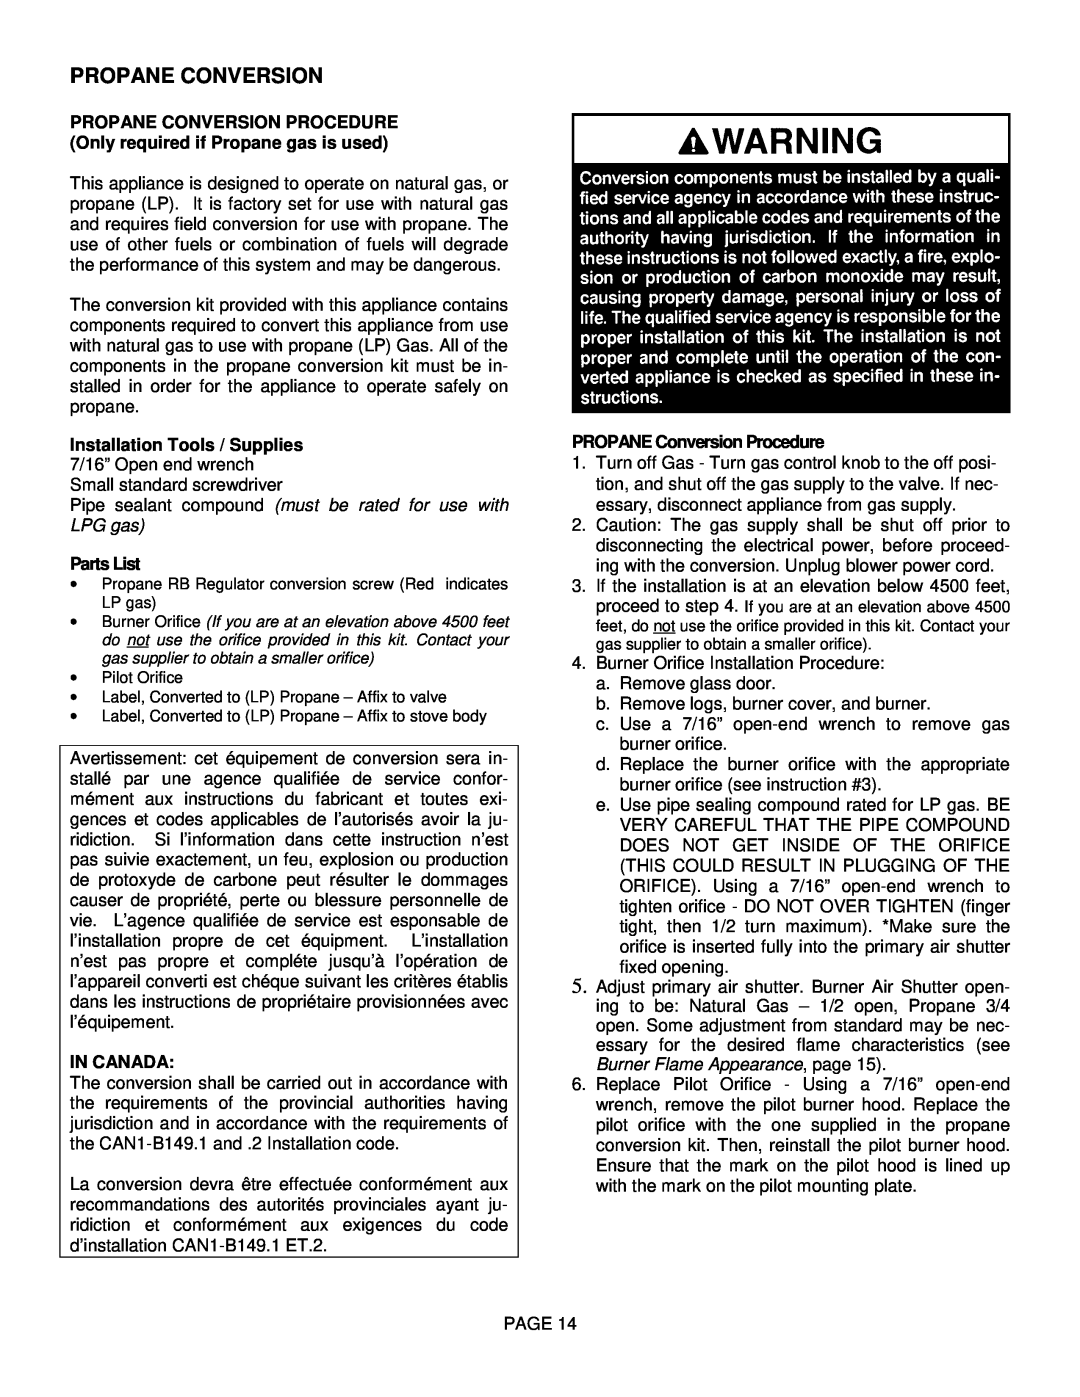 Lenoxx Electronics L30 BF-2 operation manual Propane Conversion, Parts List, In Canada, PROPANE Conversion Procedure 